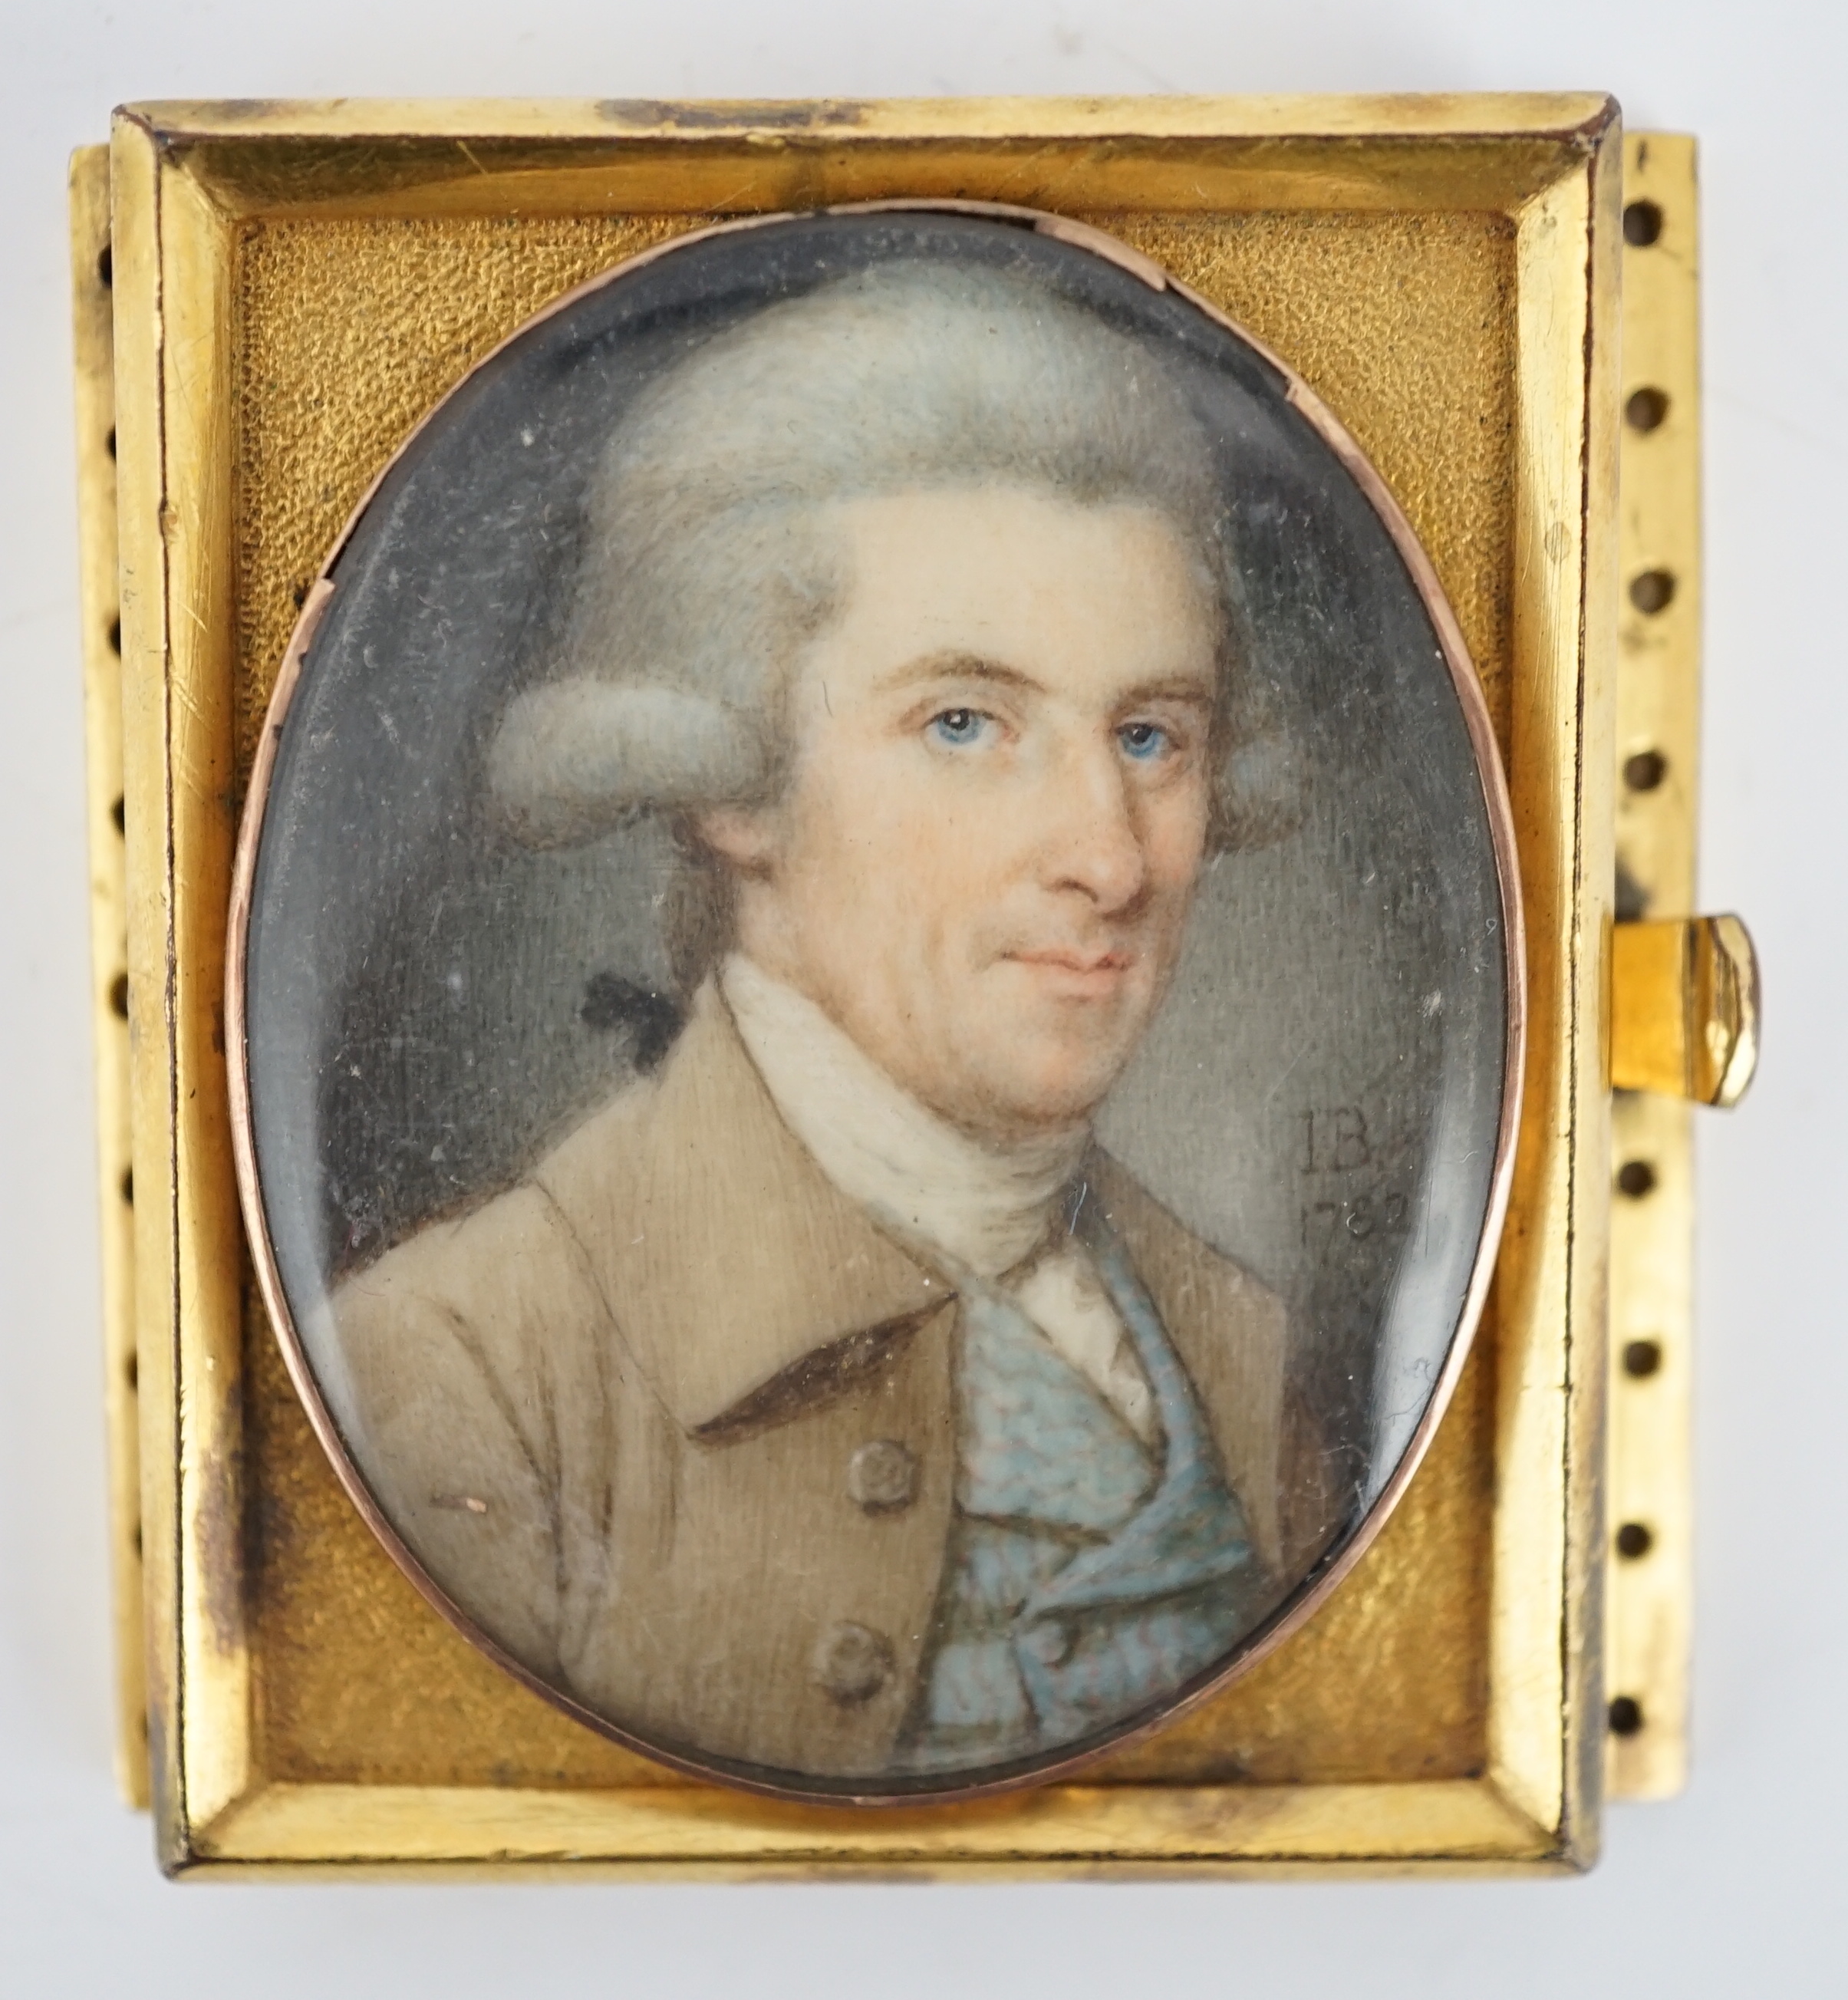 John Bogle (British, 1746-1803), Portrait miniature of a gentleman, oil on ivory, 3.7 x 2.9cm. CITES Submission reference FDTMJSBX